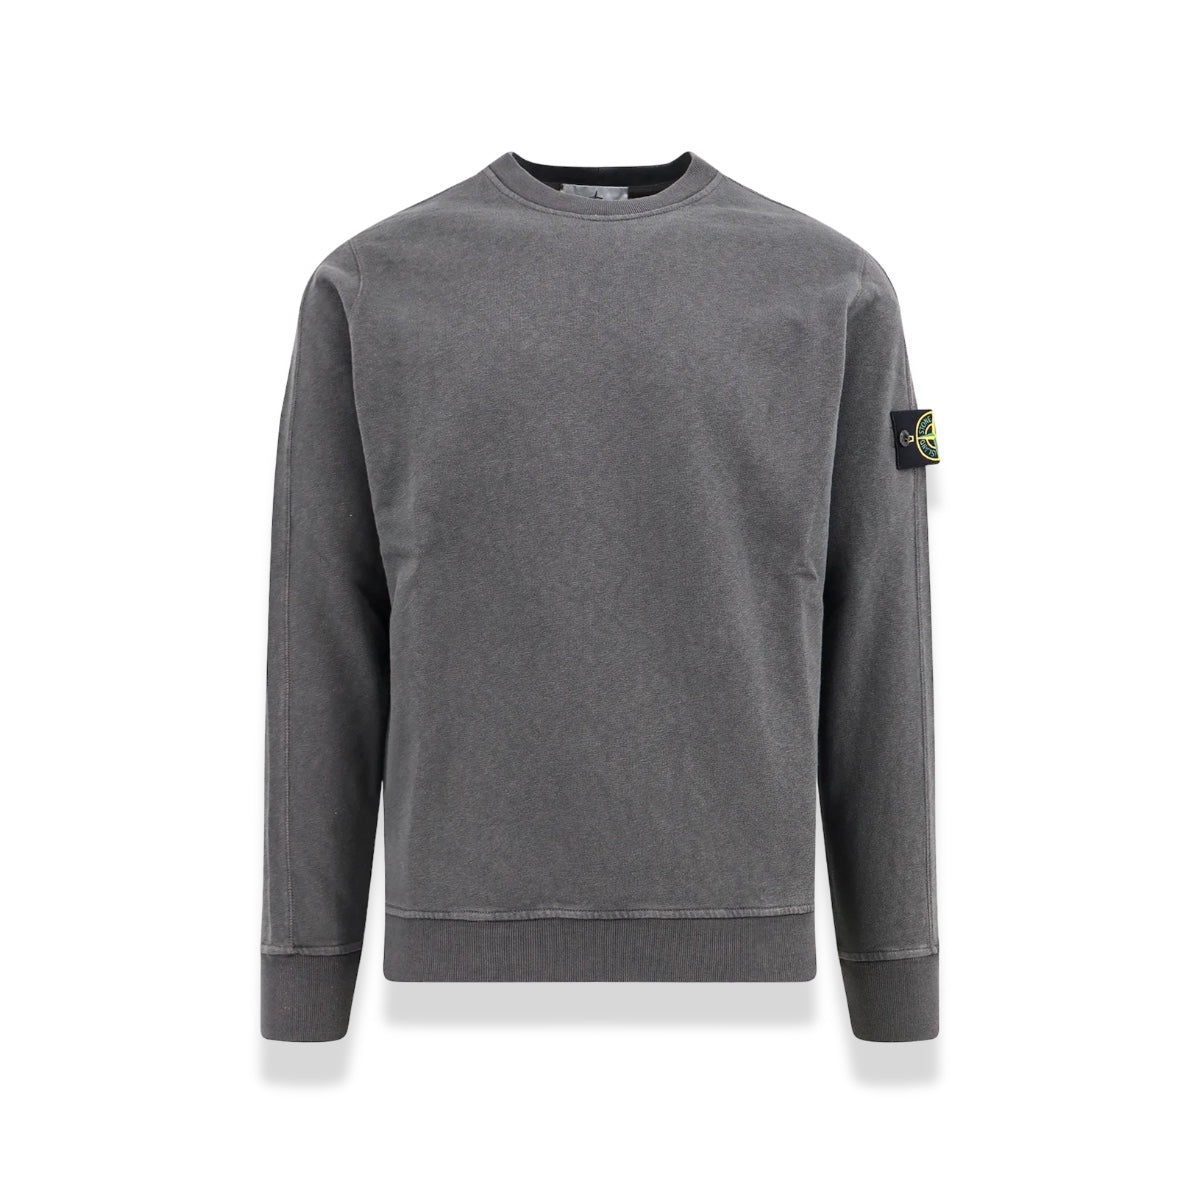 Stone Island - Fleece Sweatshirt Dark Grey